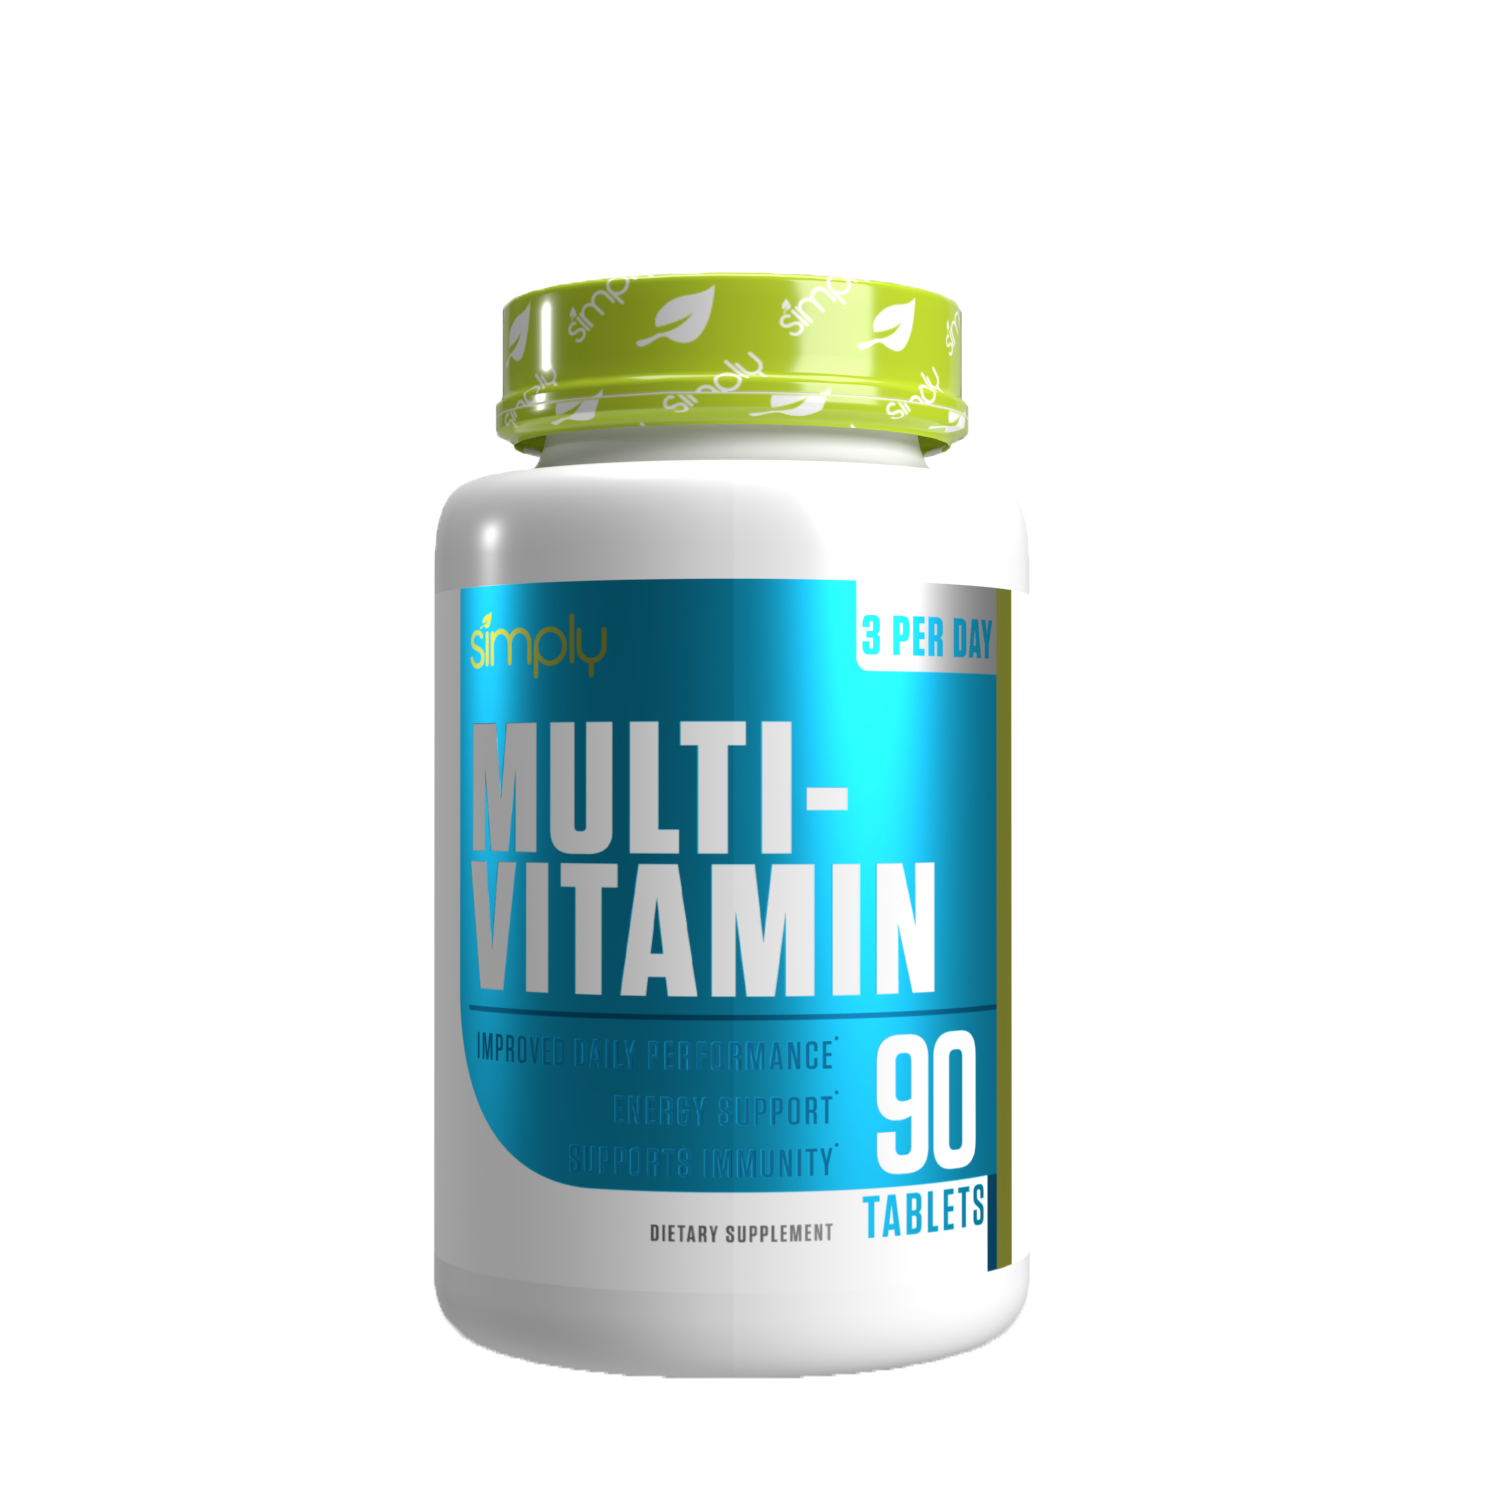 Multivitamin Advanced Daily Support